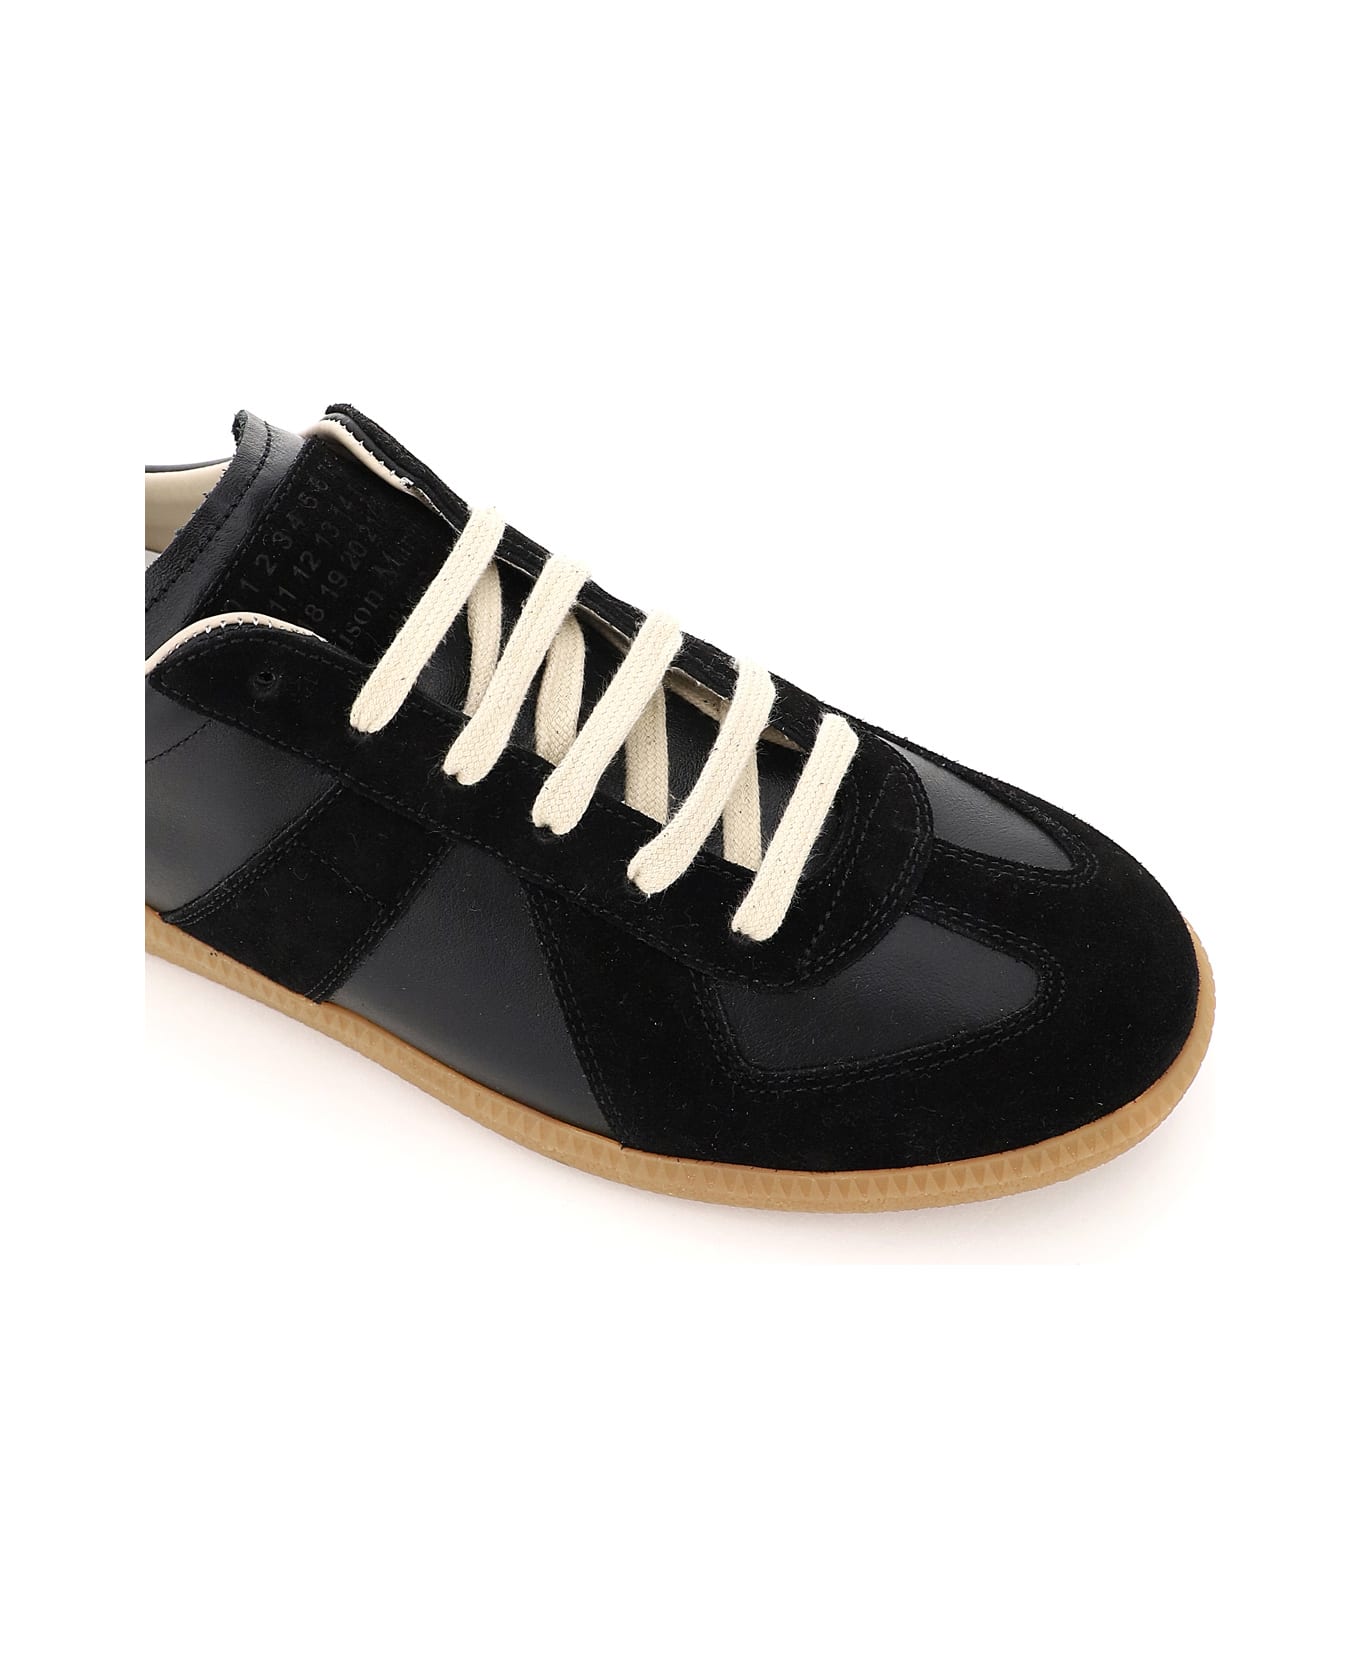 Maison Margiela Replica Leather Sneakers - Black スニーカー